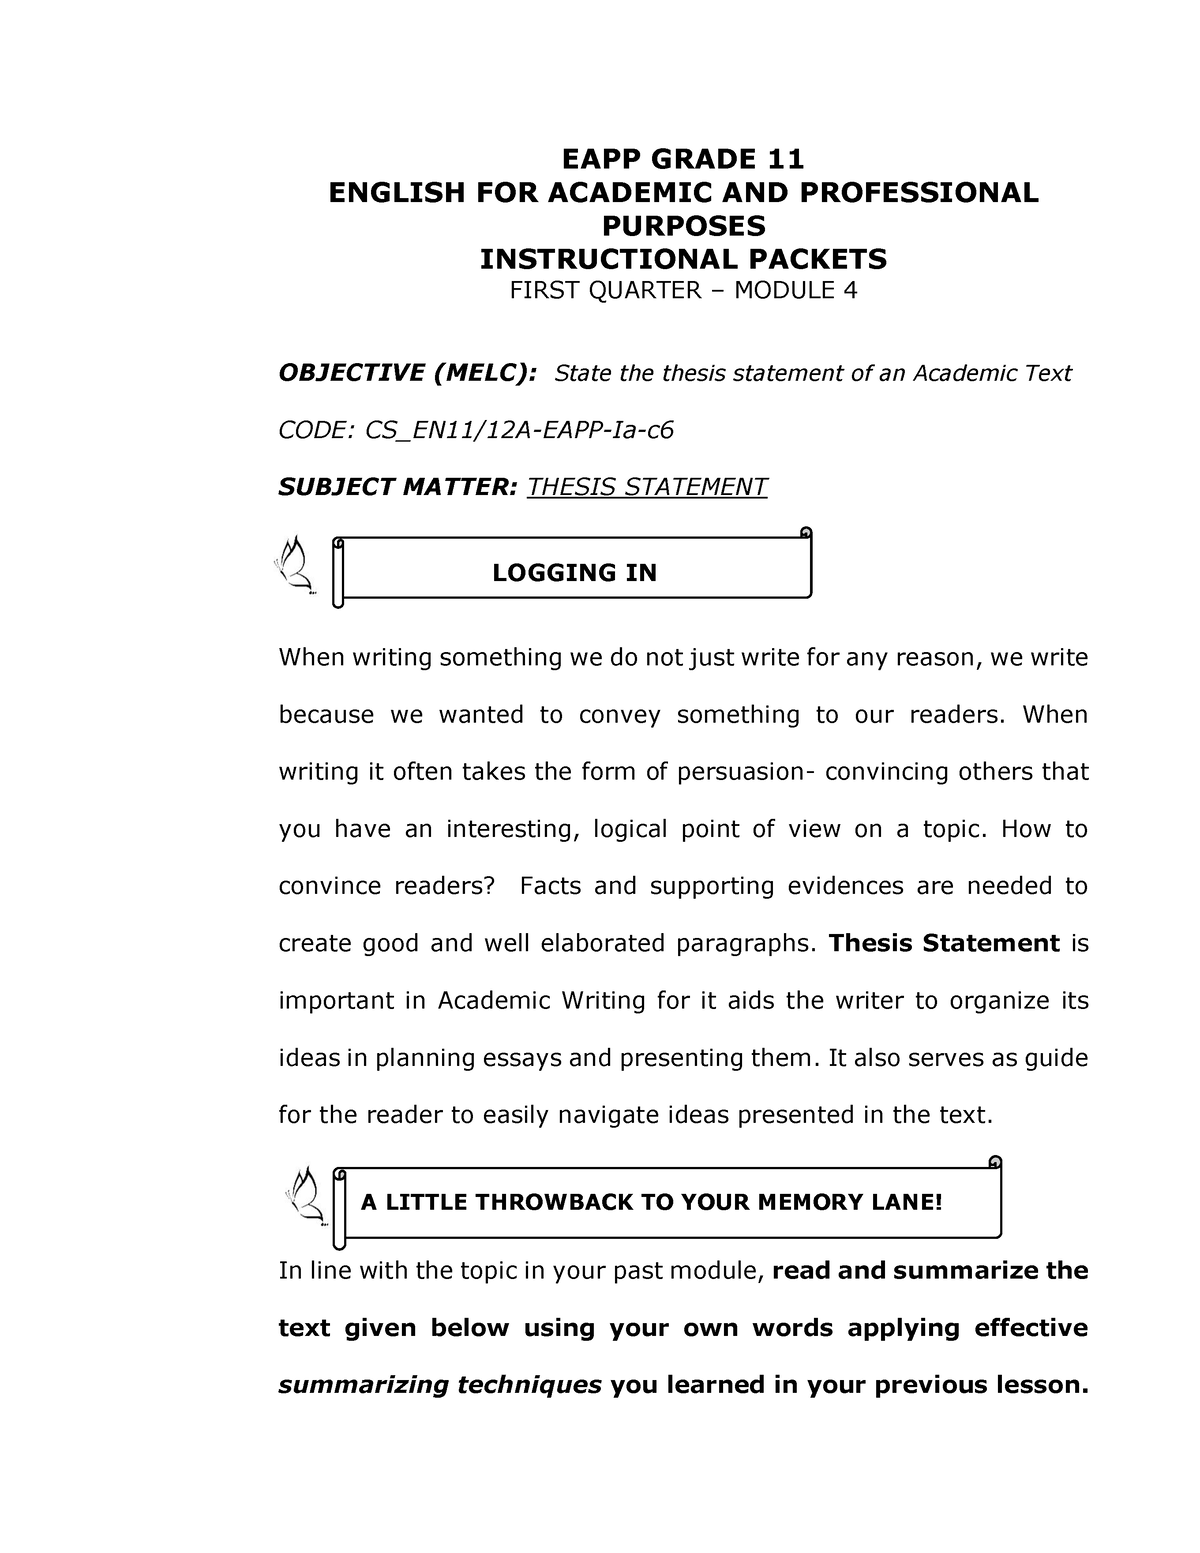 eapp thesis statement pdf